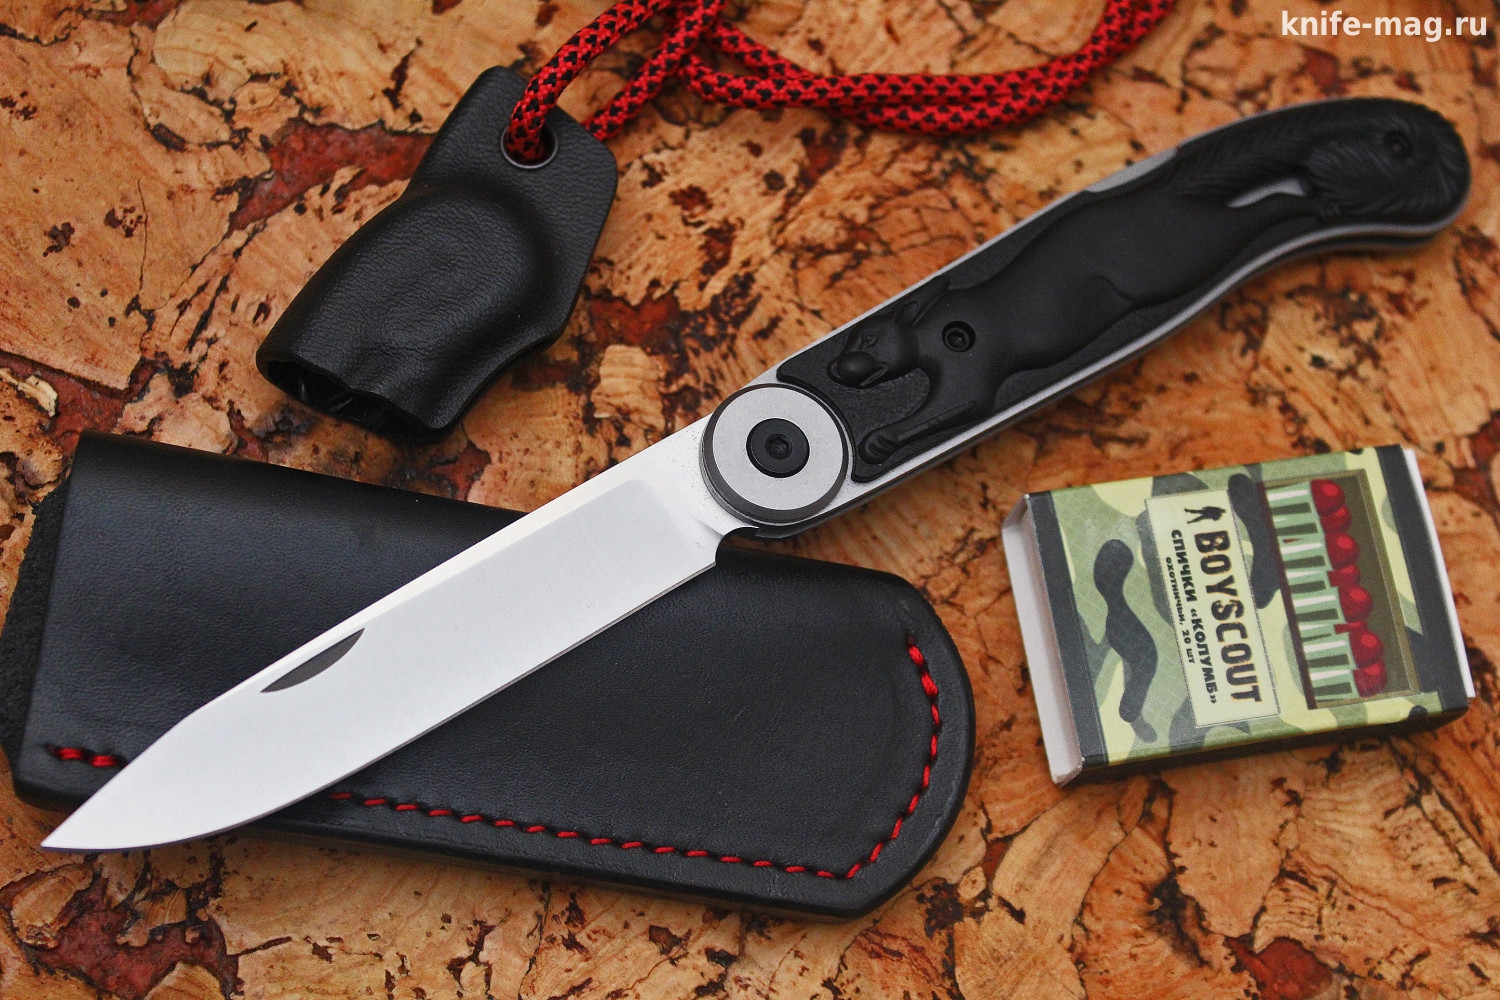 Купить нож Складной нож Belka (Белка) – Brutalica | KNIFE-MAG.RU